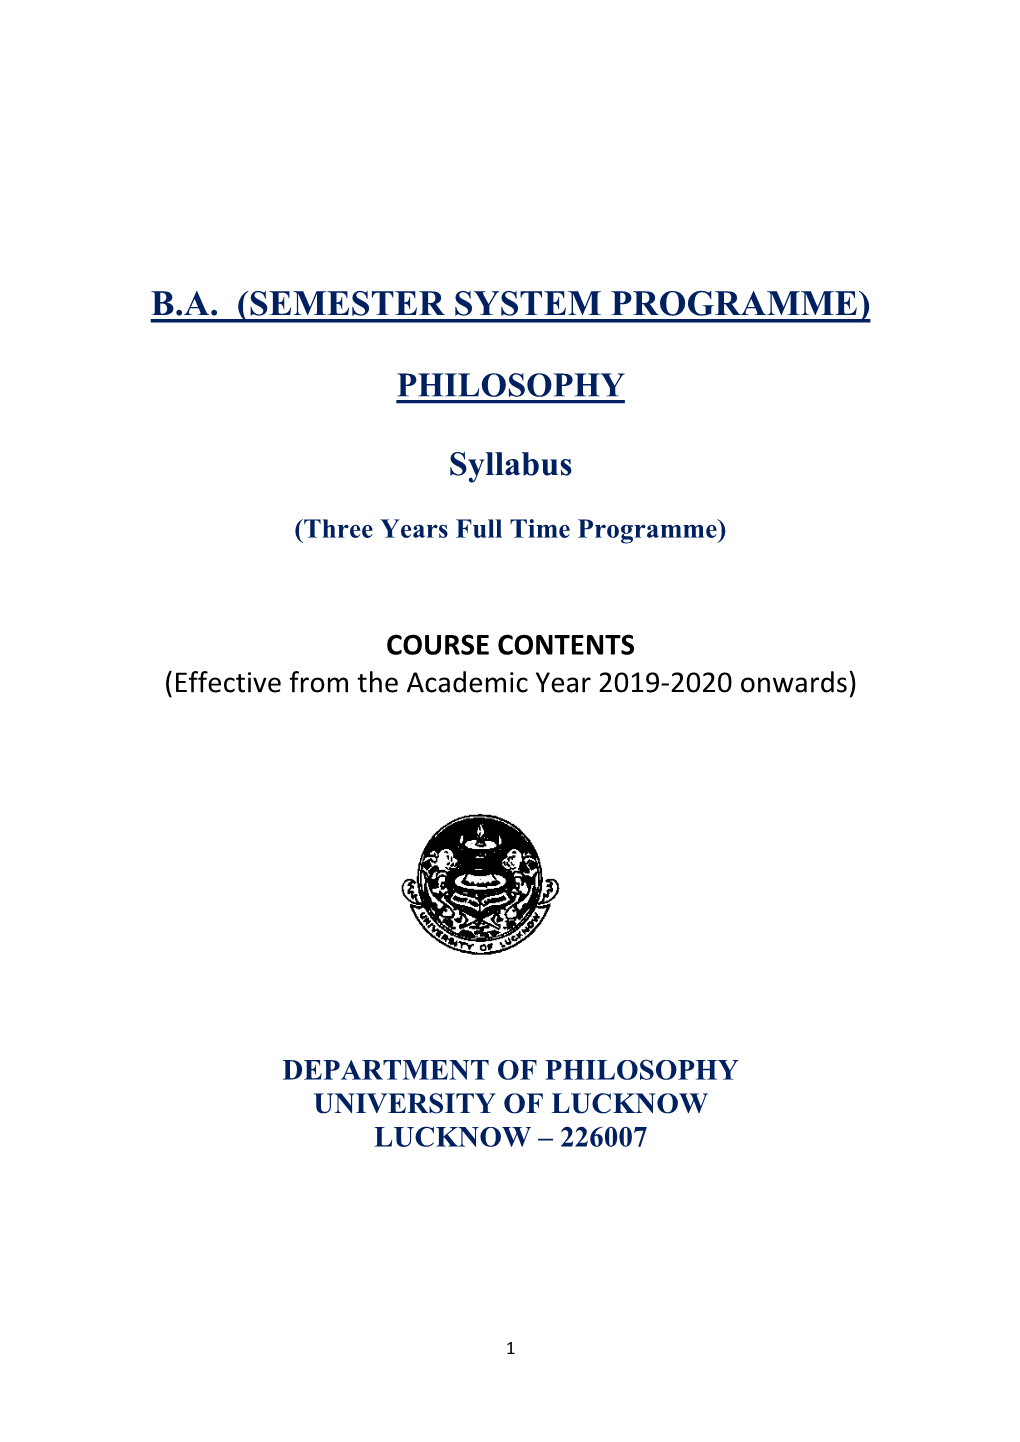 B.A. (Semester System Programme)